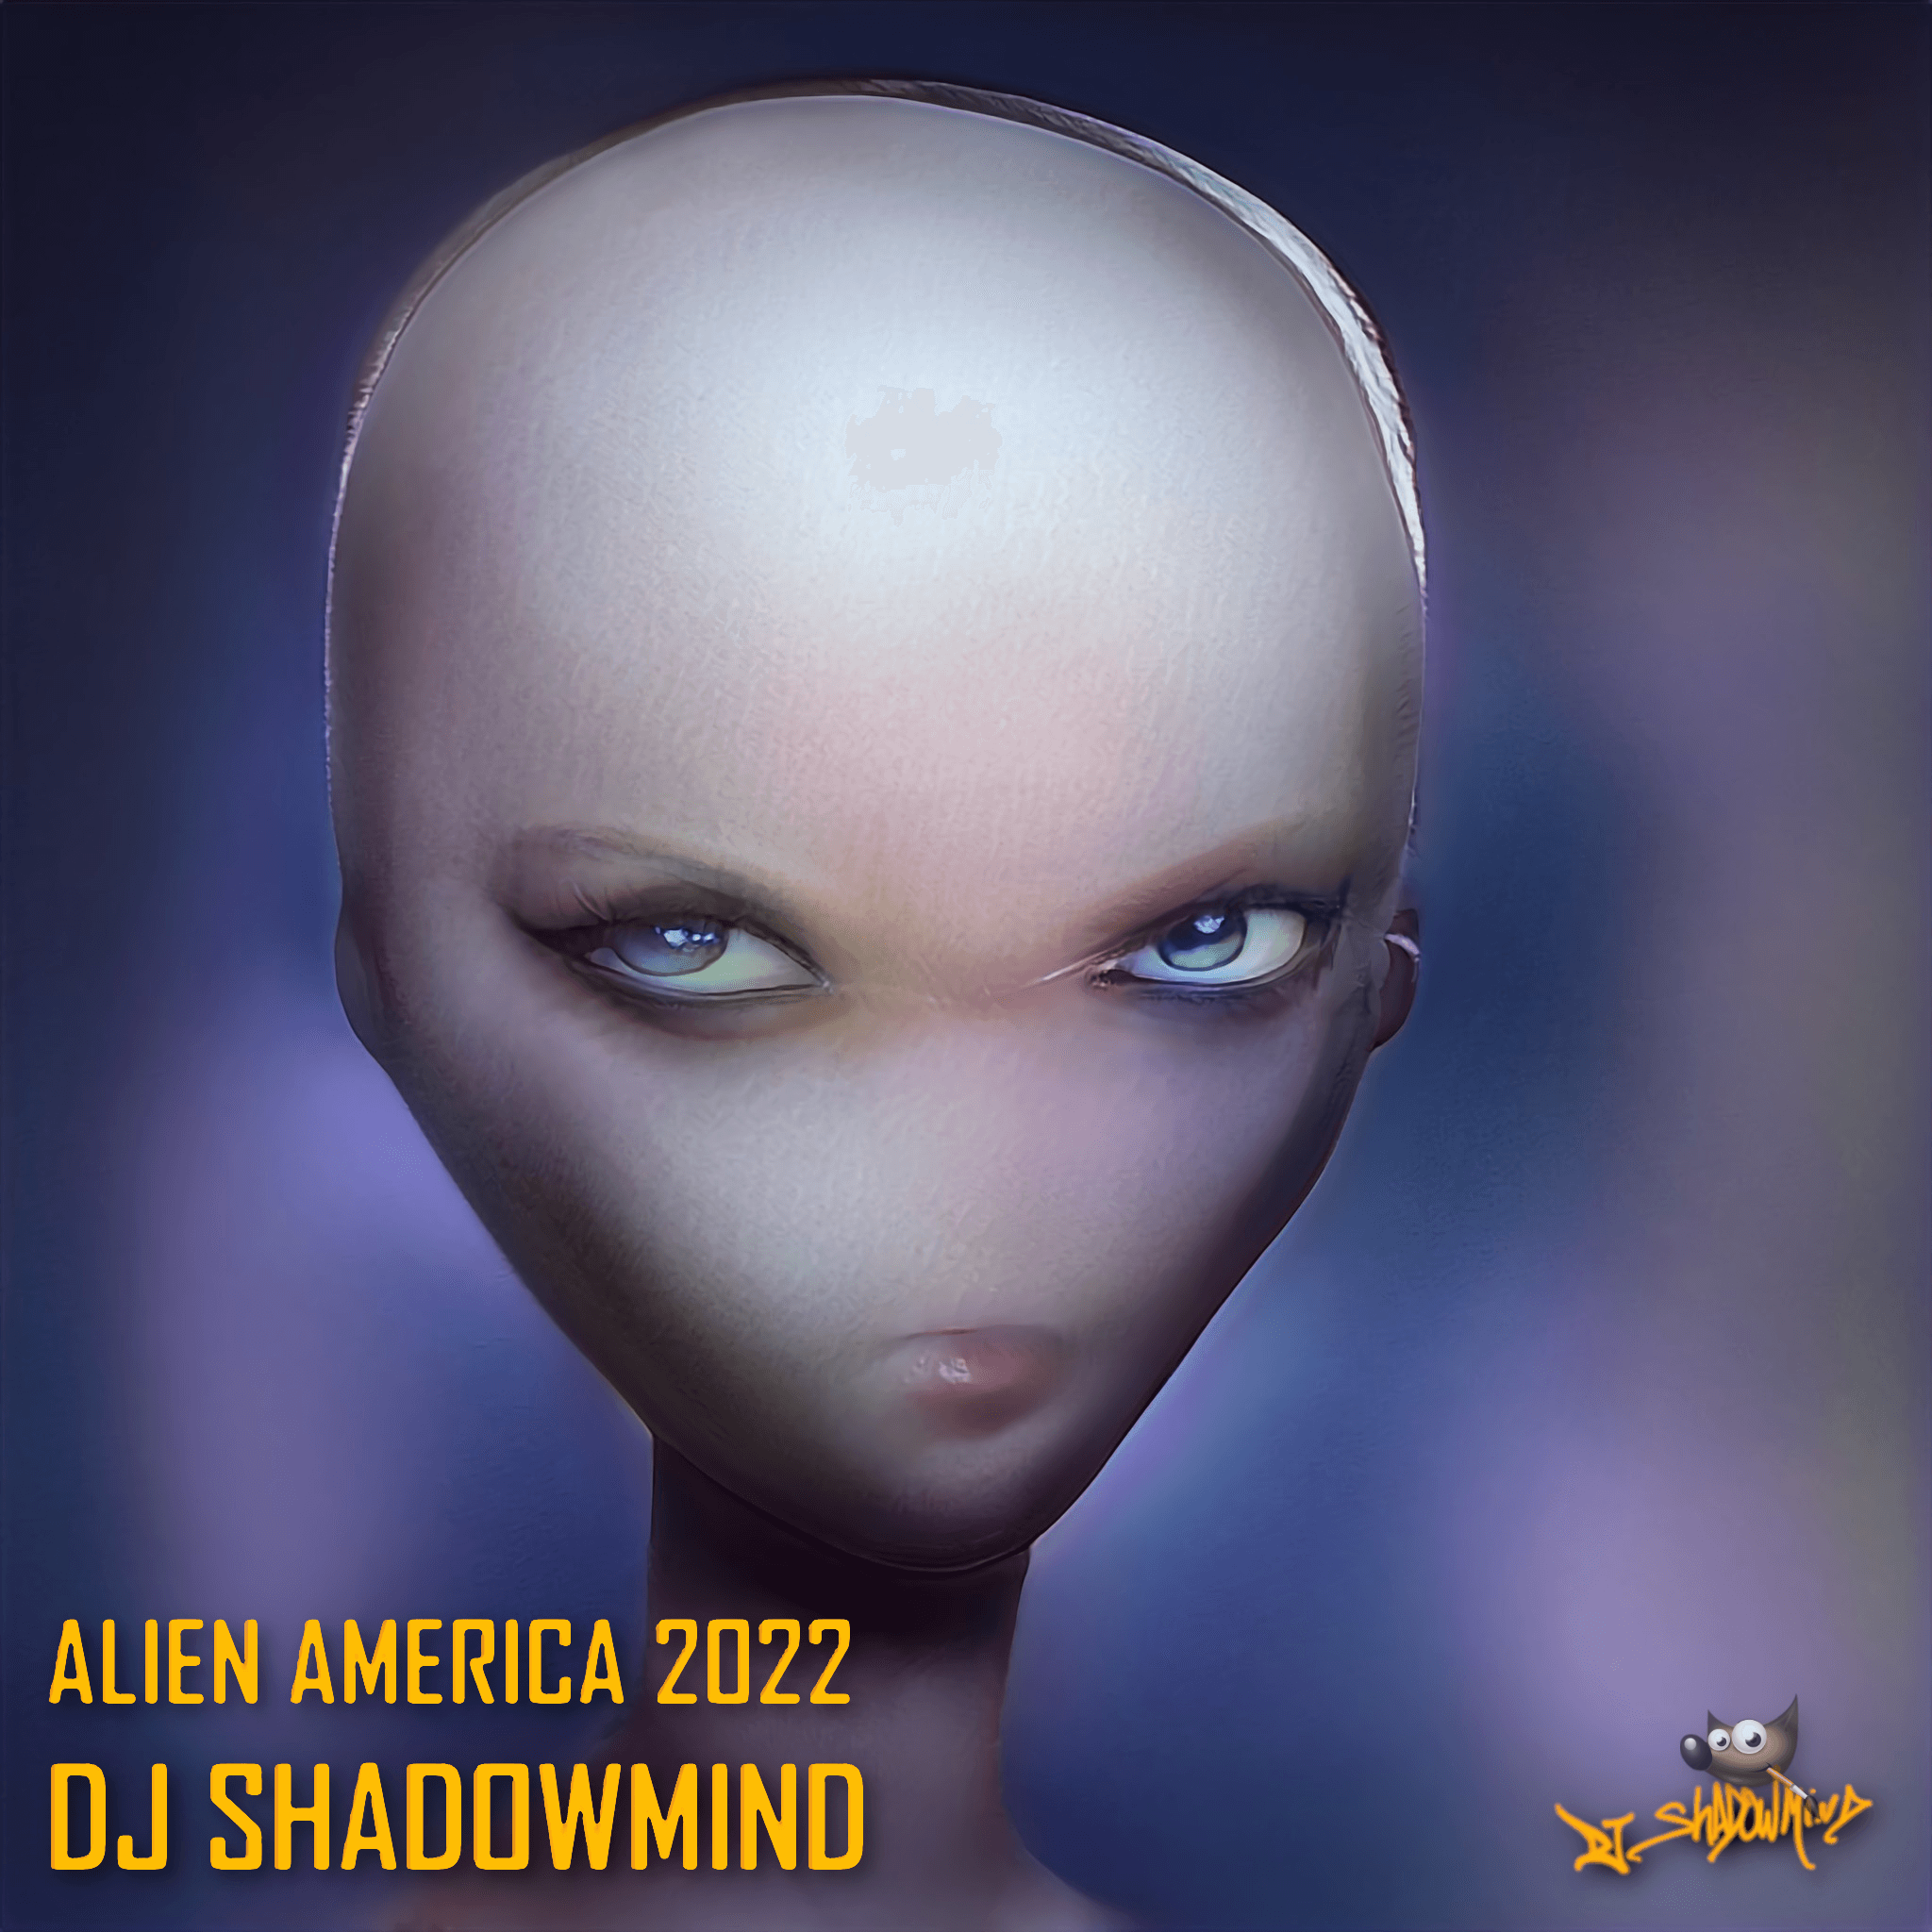 Alien America 2022 - Agent 032